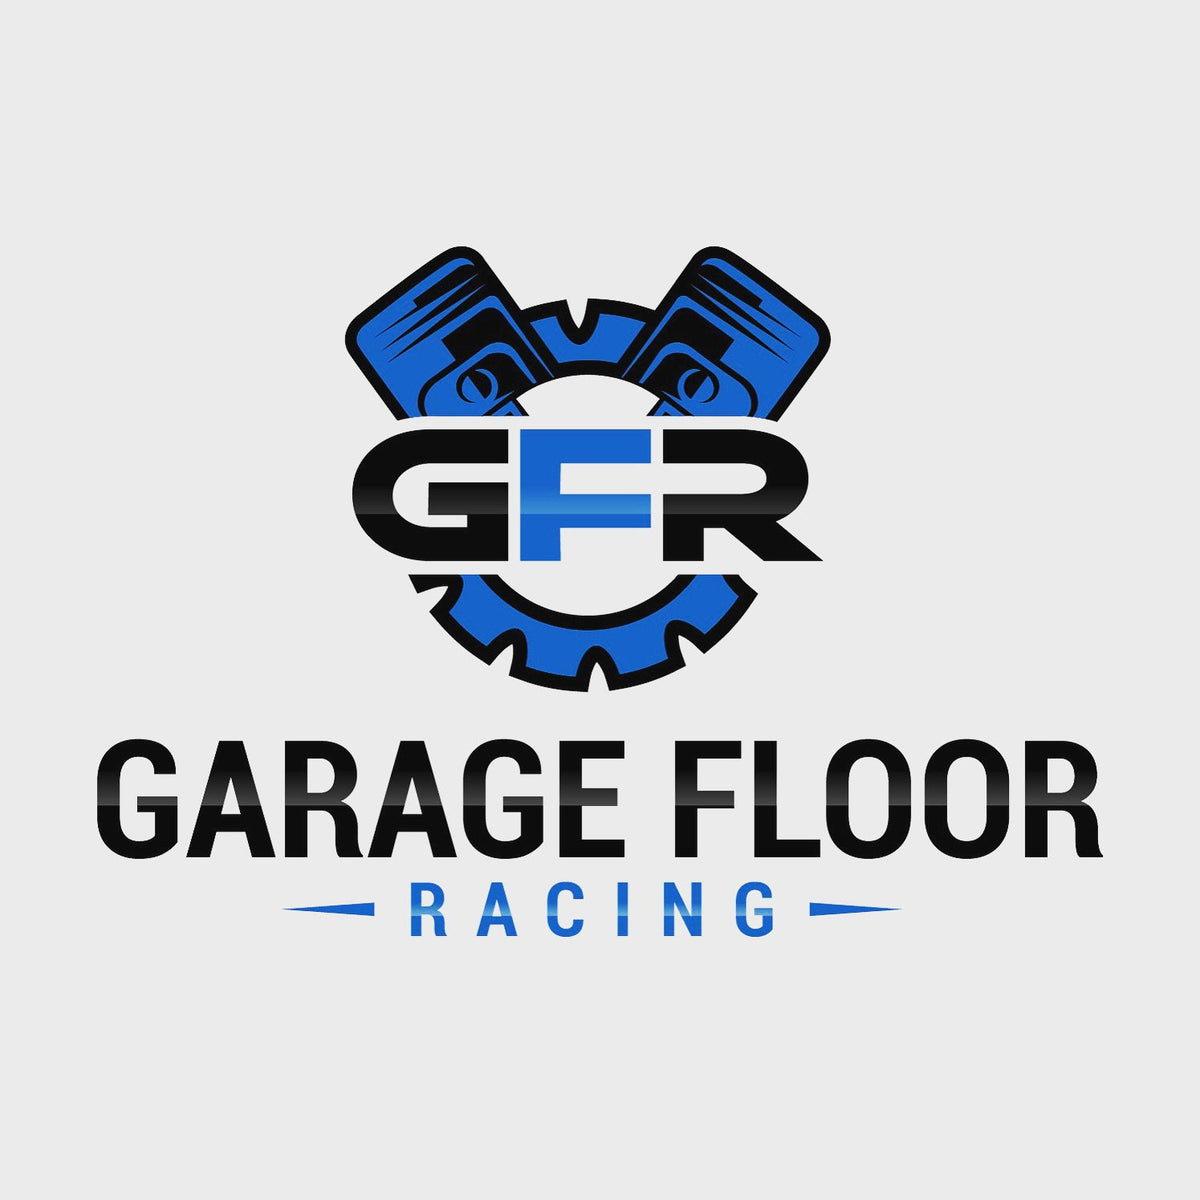 www.garagefloorracing.com